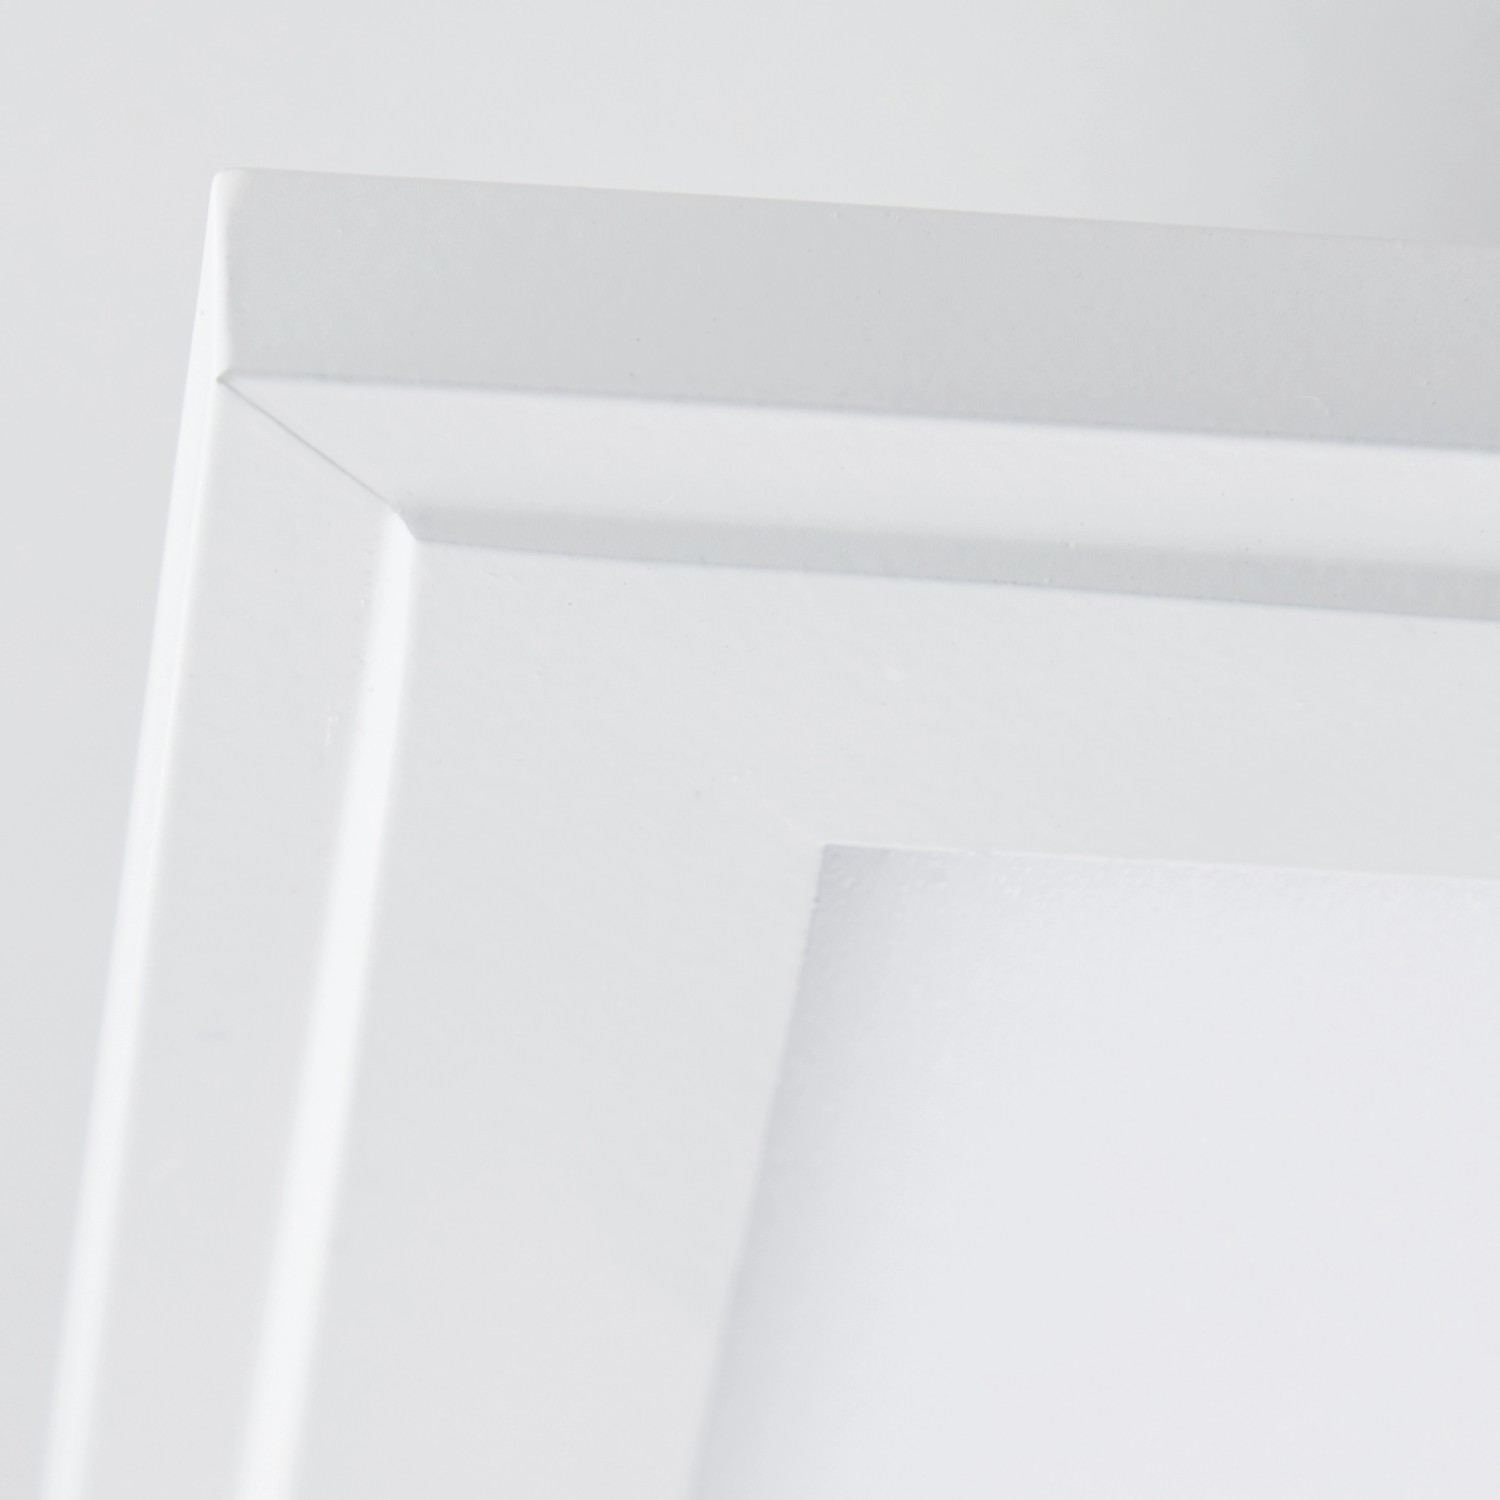 Brilliant LED-Deckenaufbau-Paneel kaufen Allie 40 cm Weiß bei x OBI 40 cm